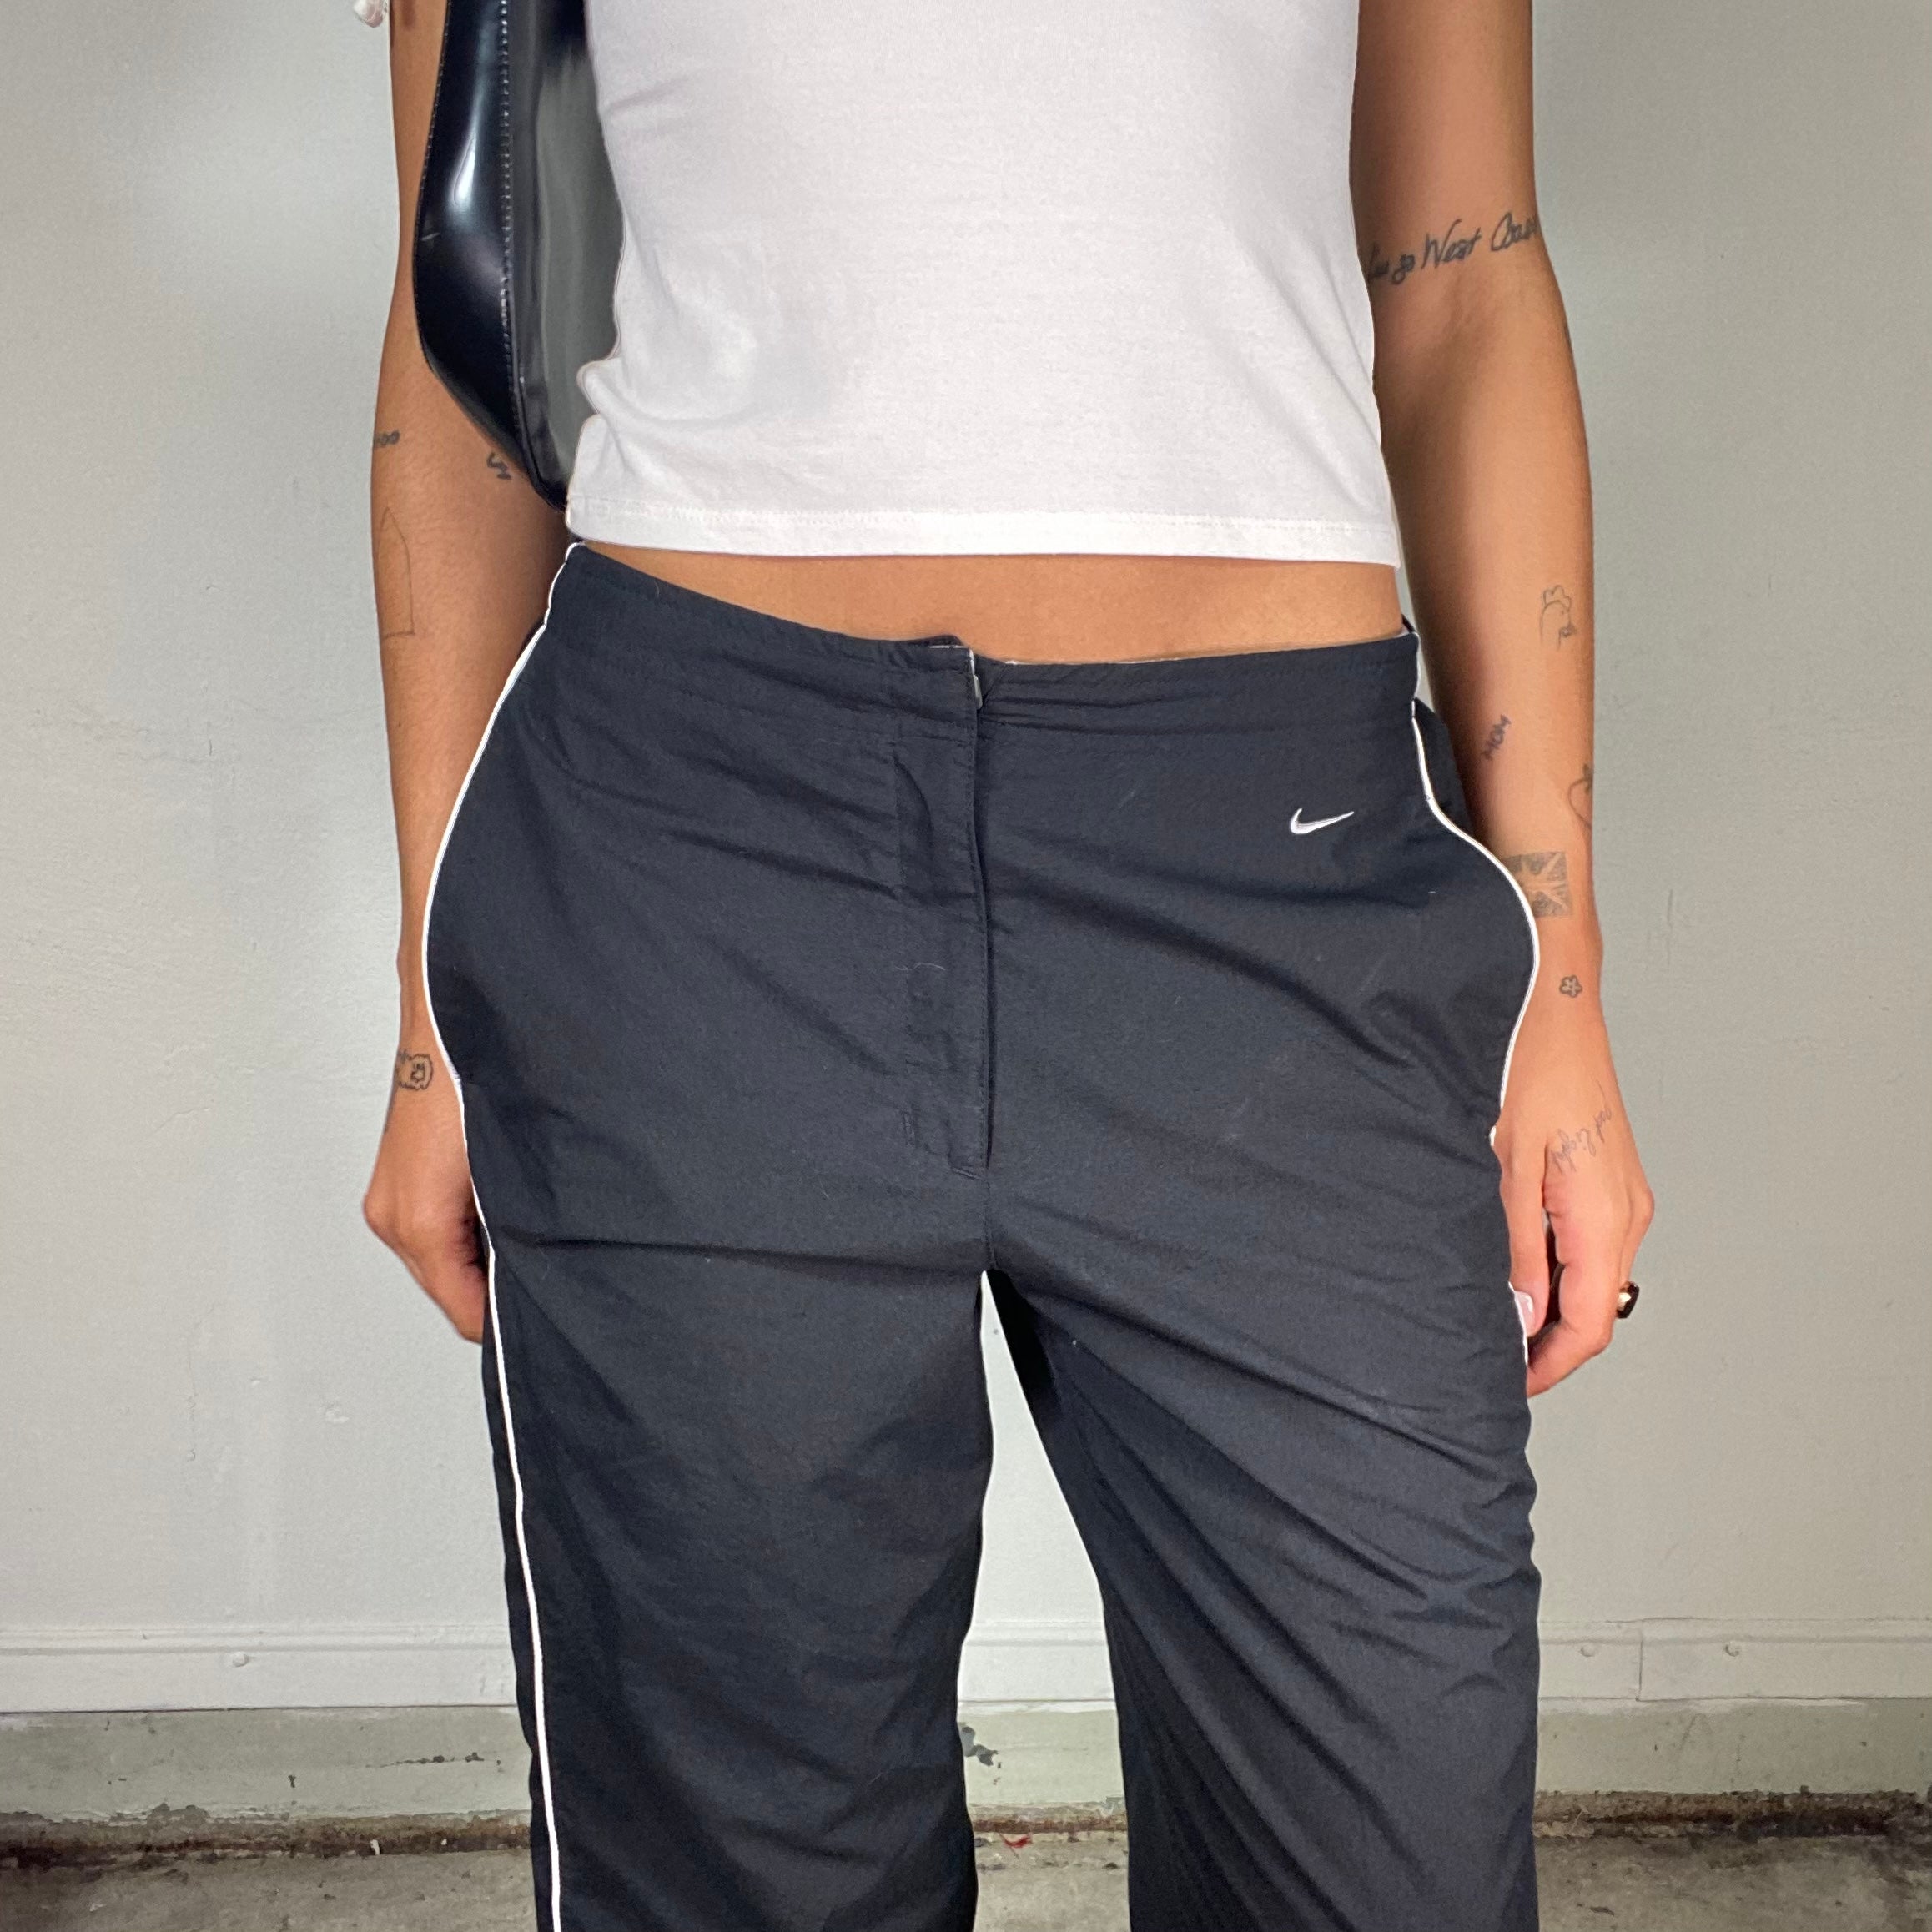 Vintage 2000's Sporty Nike Capri Track Pants with Clean White Trim Det –  Michelle Tamar